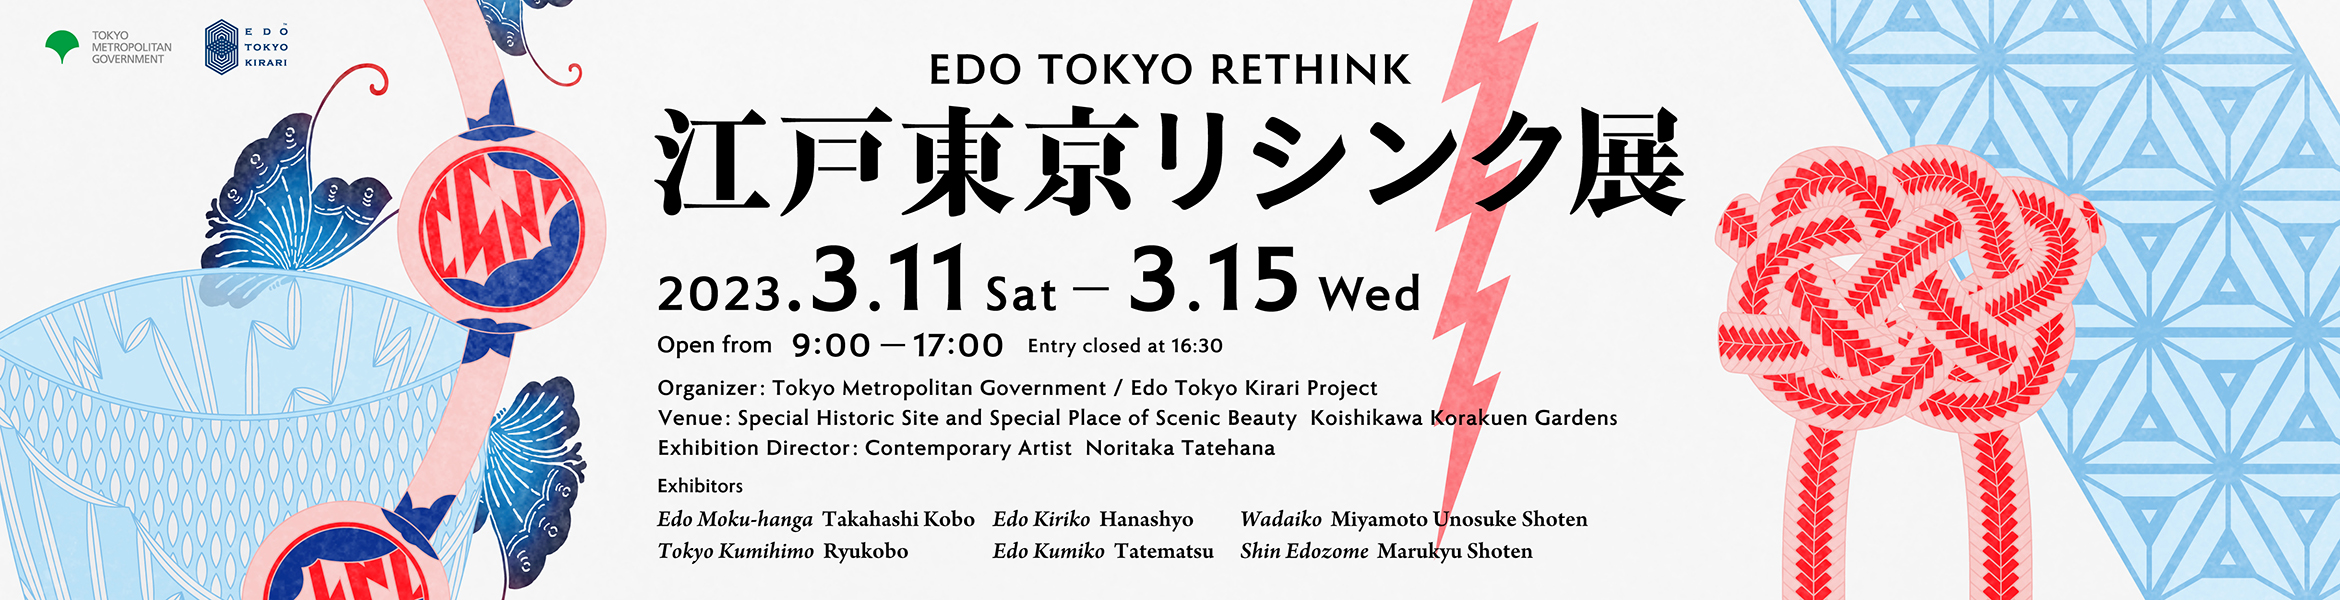 R4 EDO TOKYO RETHINK